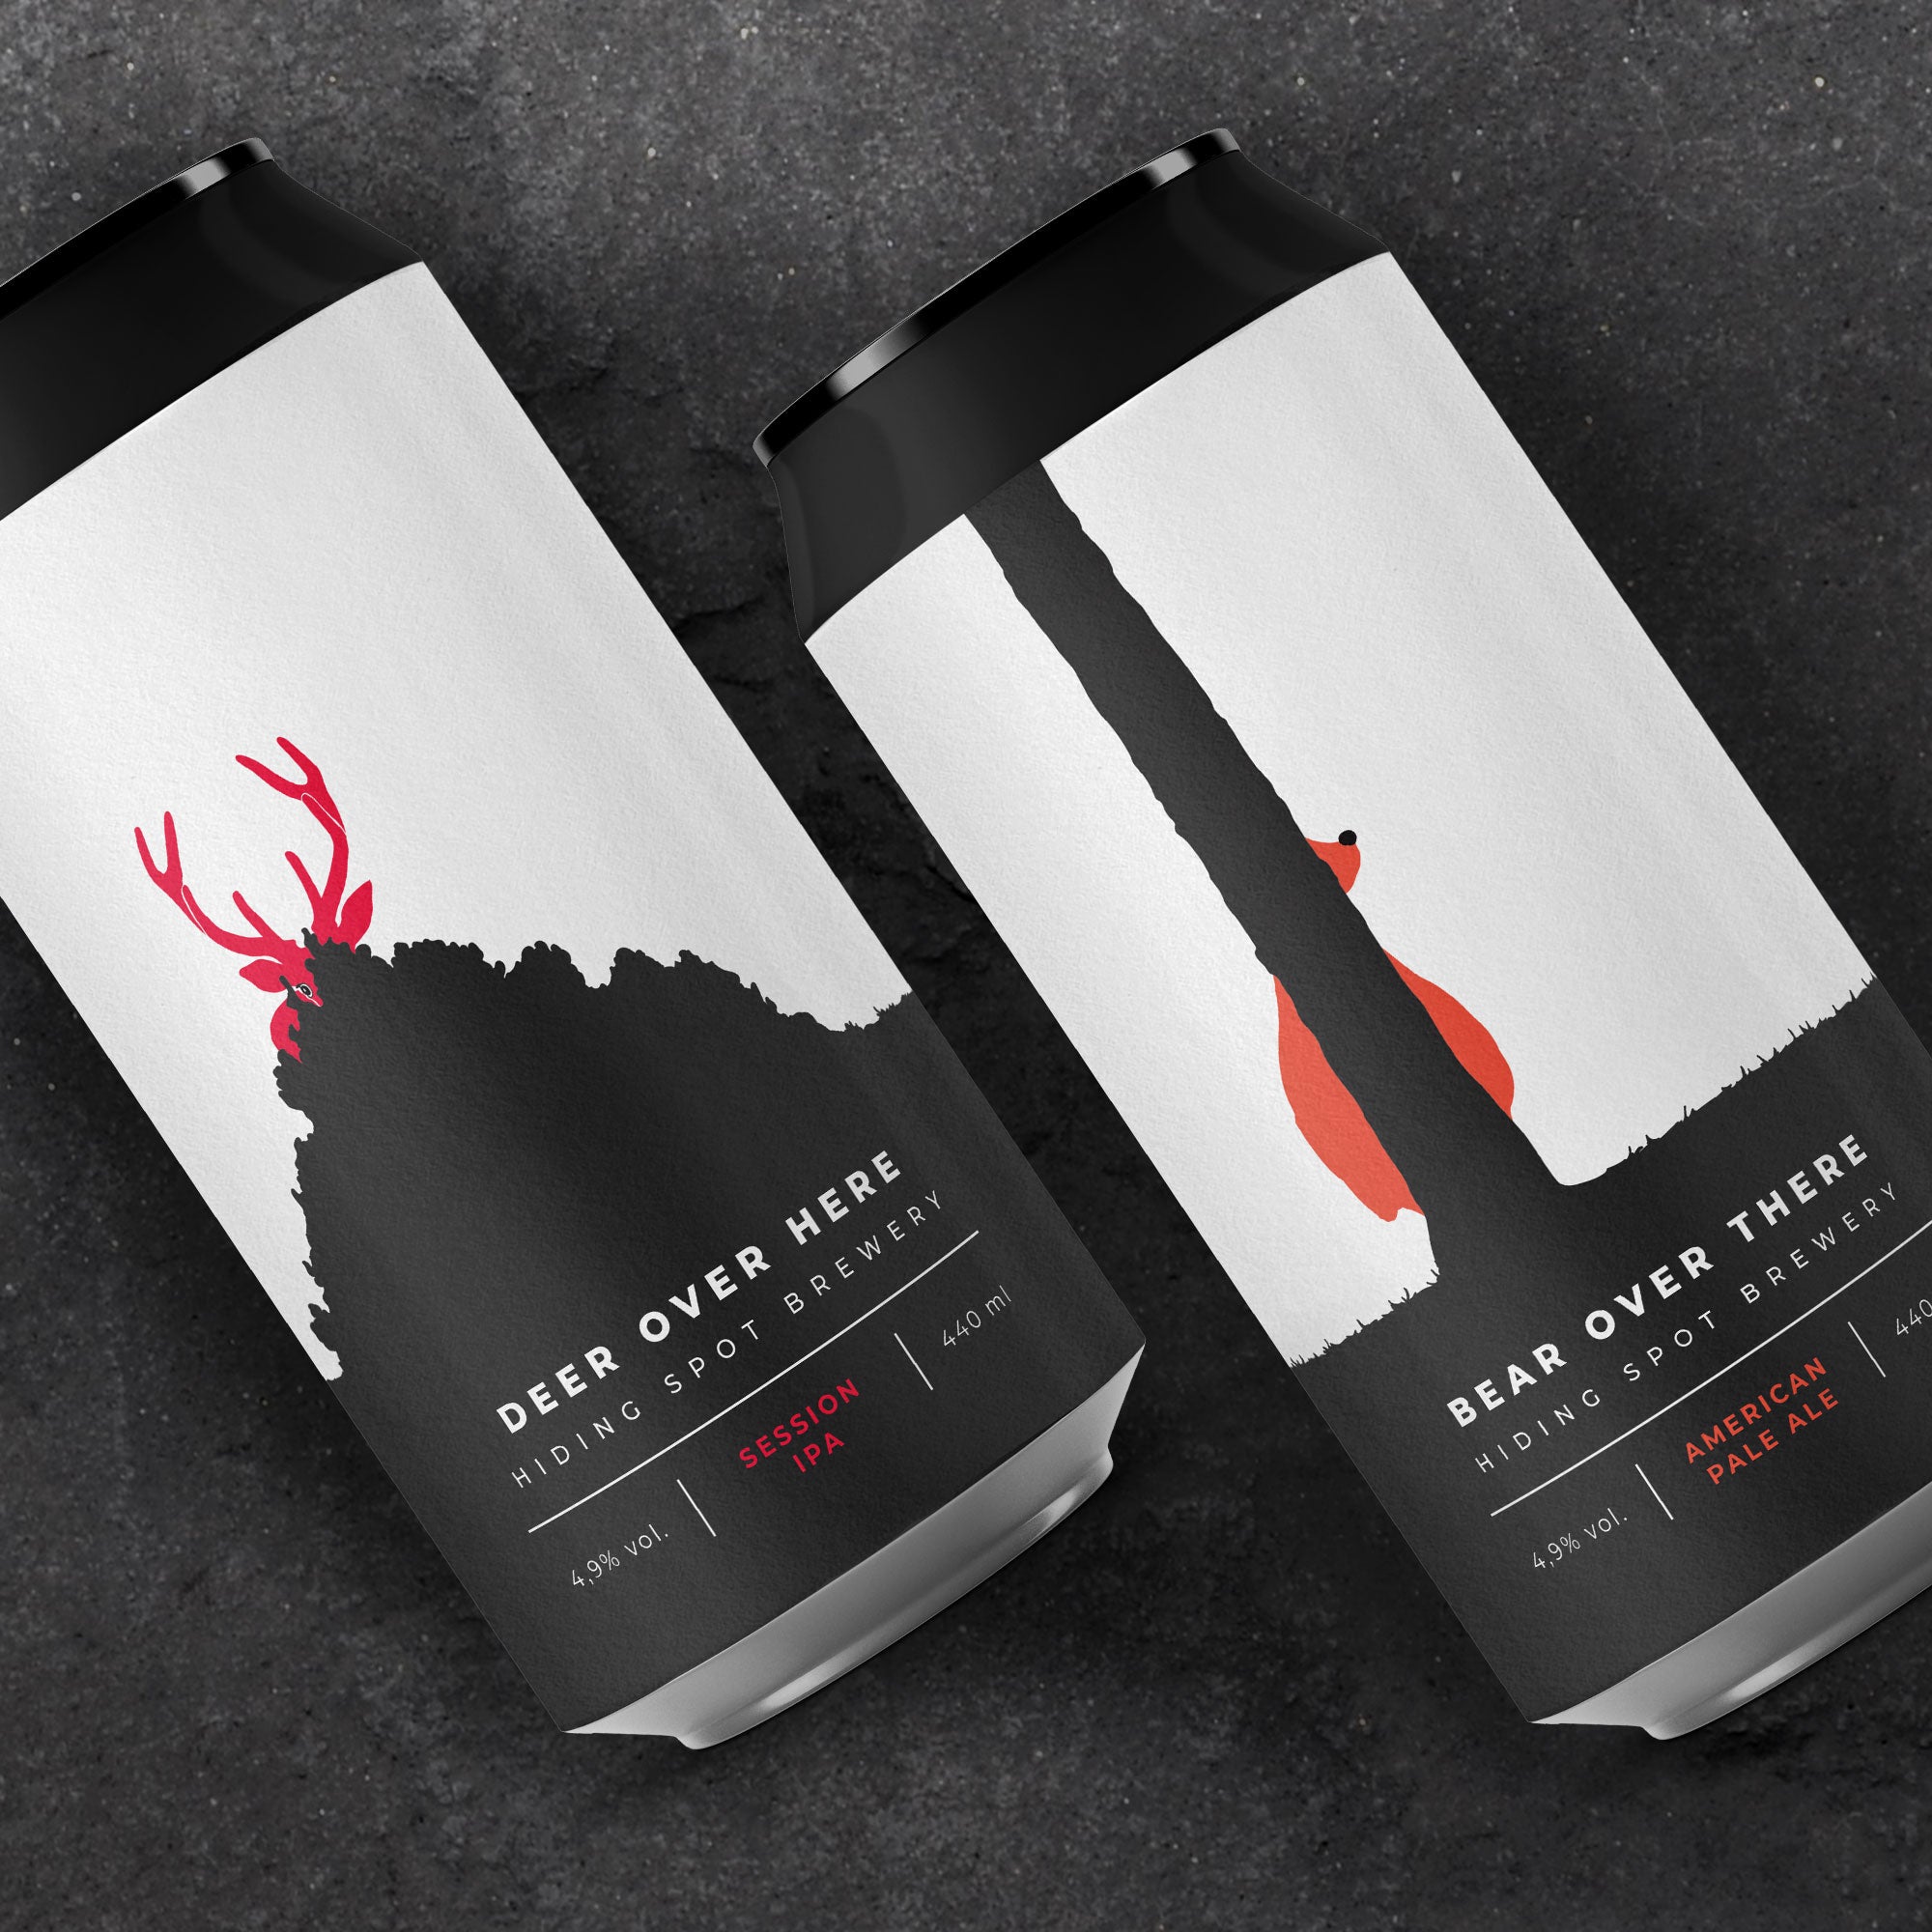 Karolina Król Studio minimalist branding beer can label design